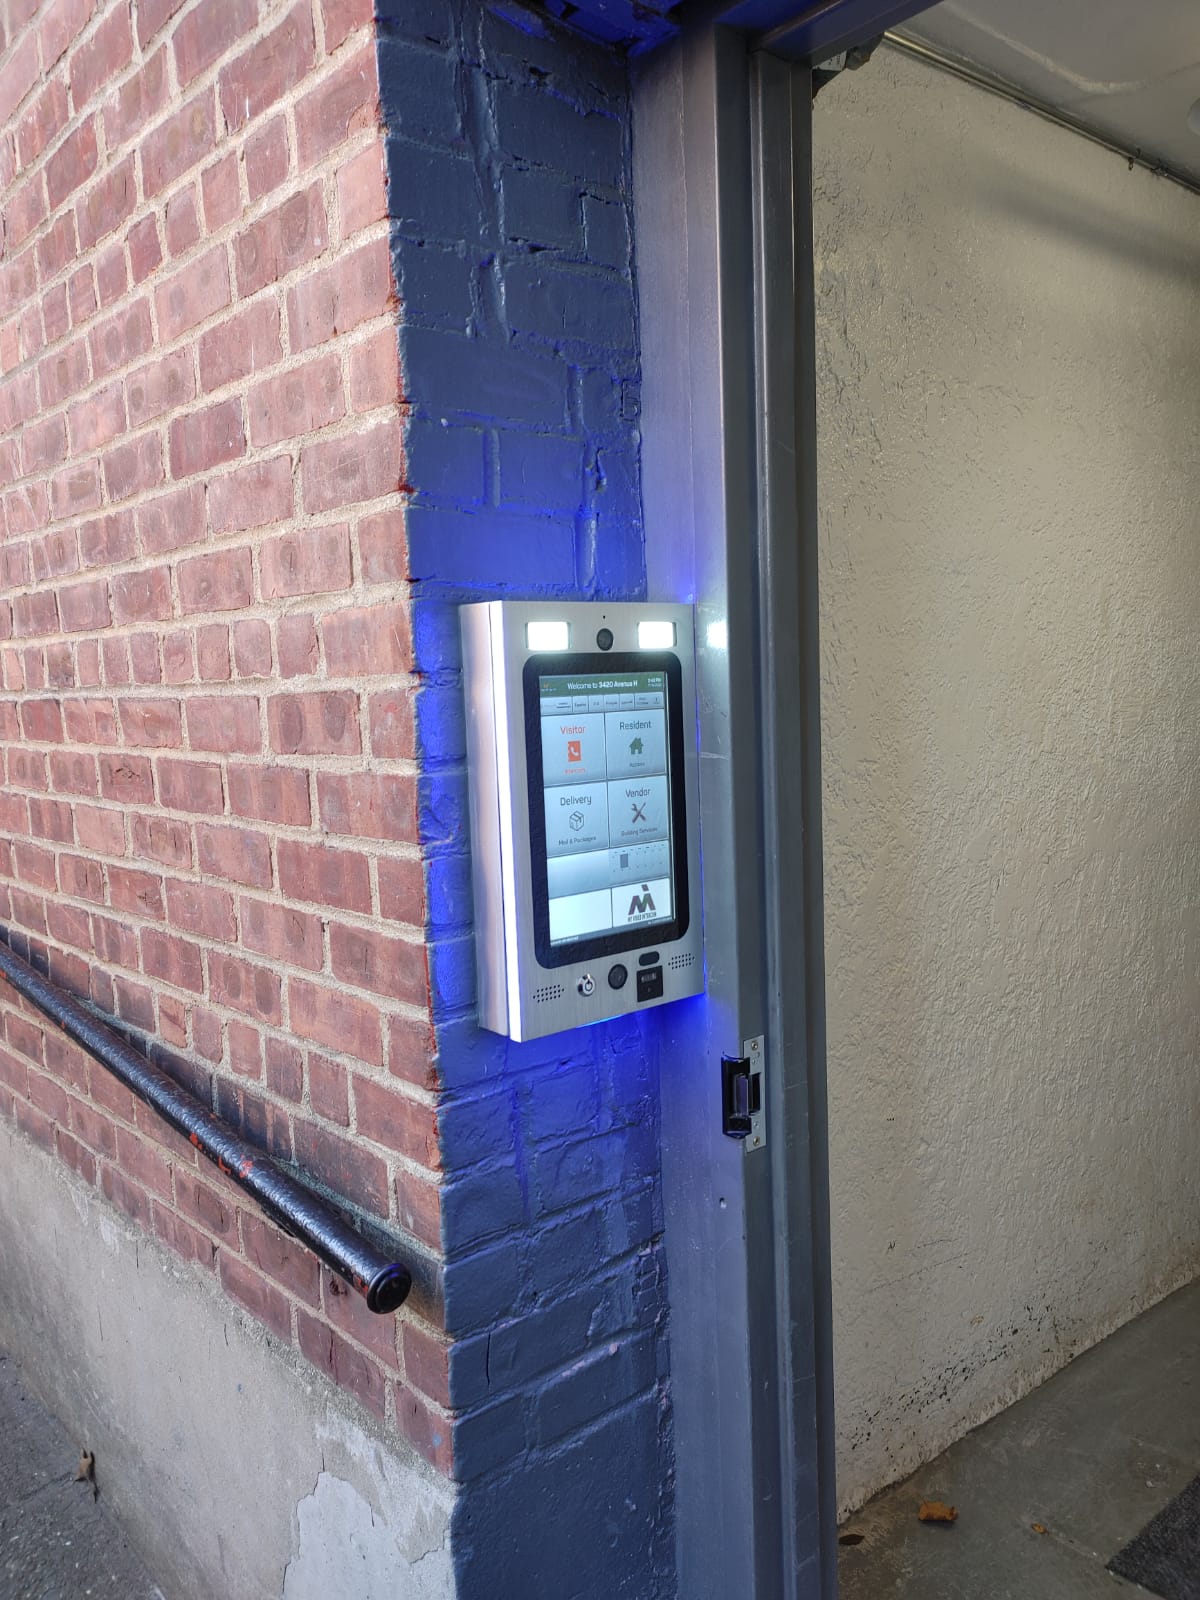 mvi keycom mounted on brick wall by building entrance